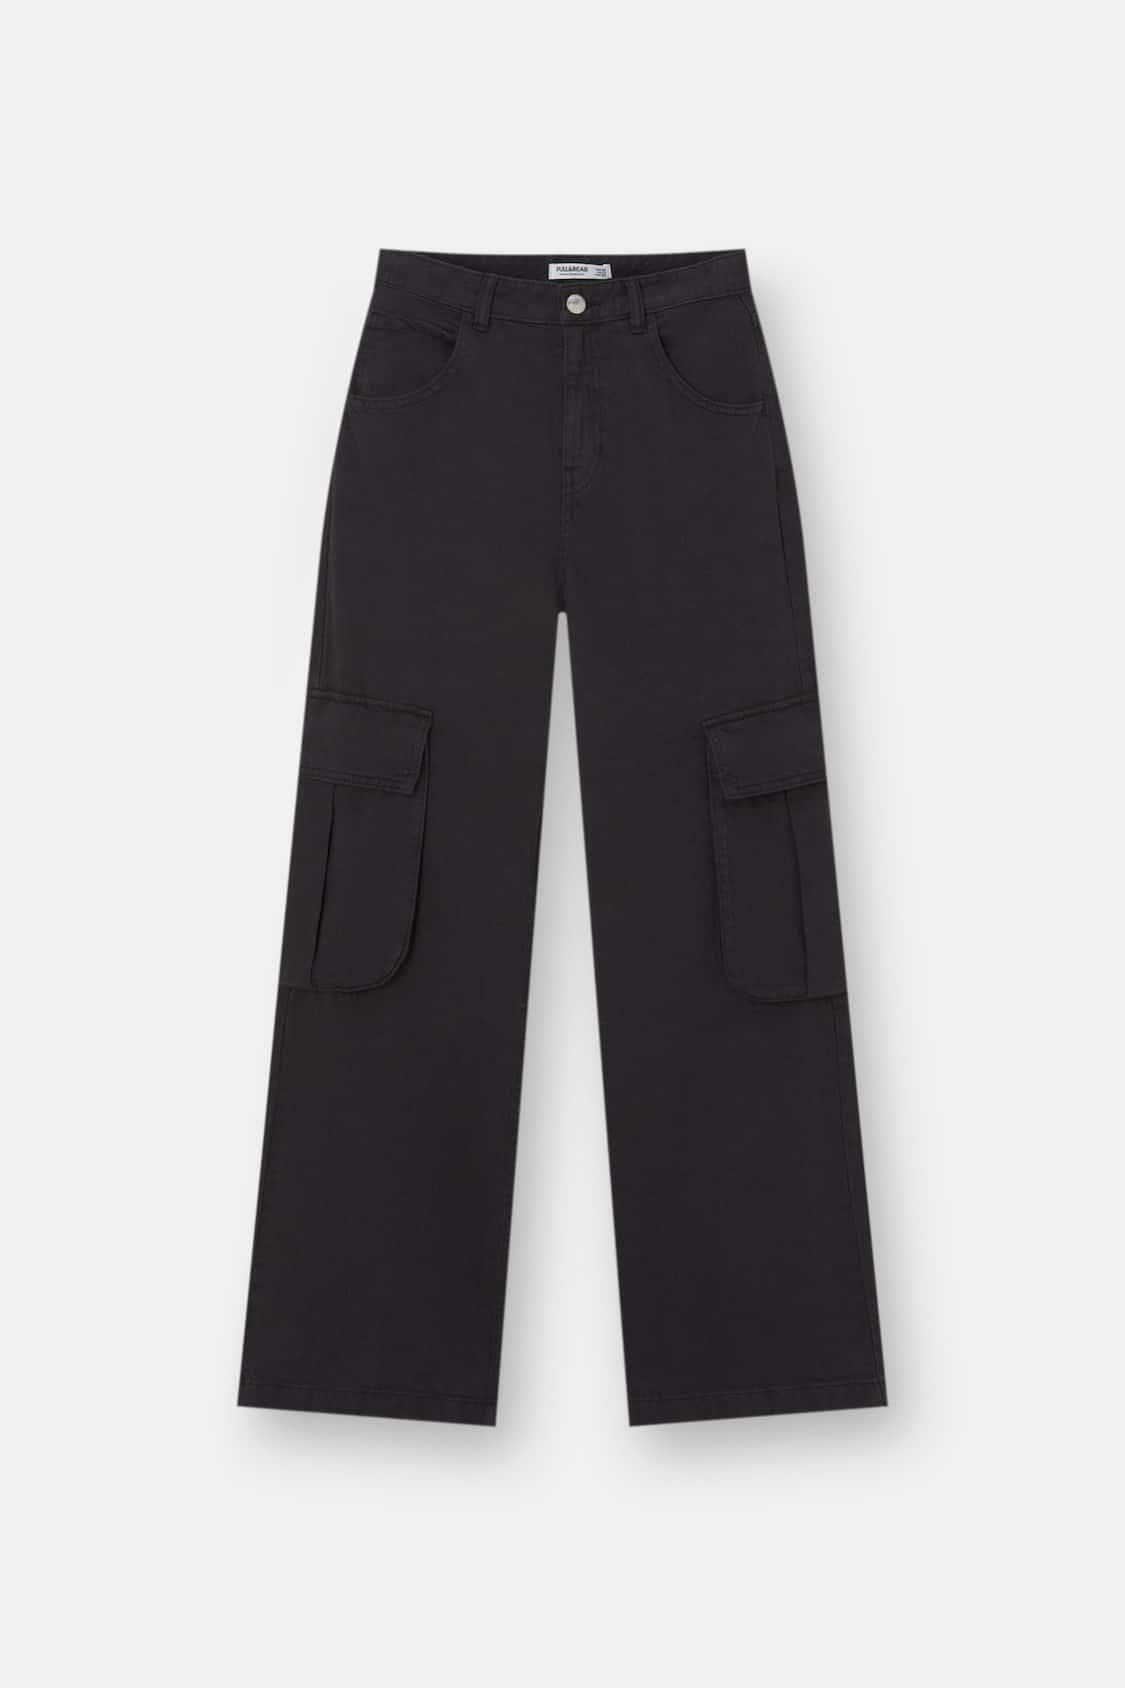 Cargo Pants for Women High Waist Cargo Jeans Multi Flap Pocket